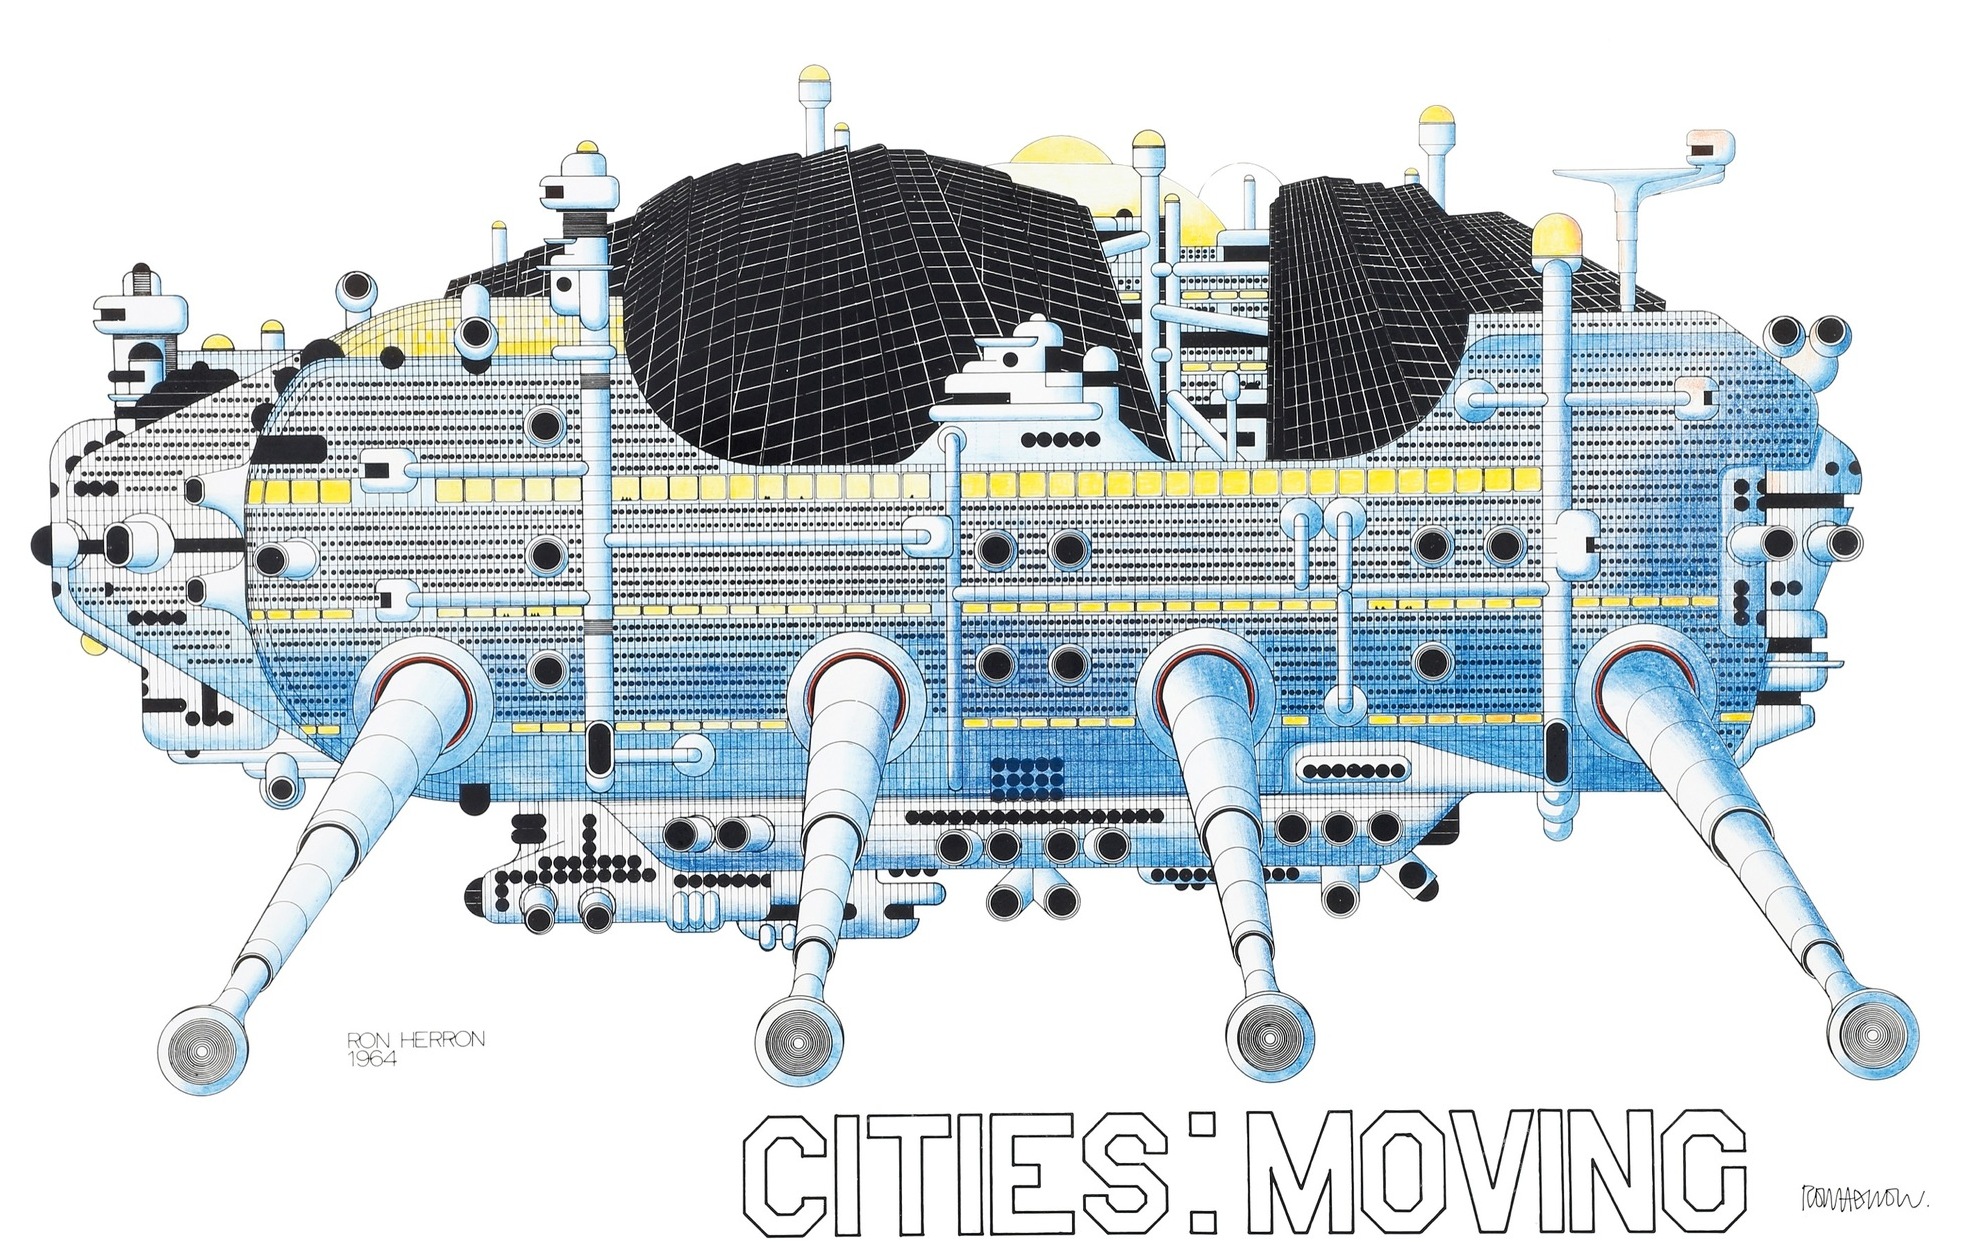 Cities: moving. Archigram. Ron Herron. 1964